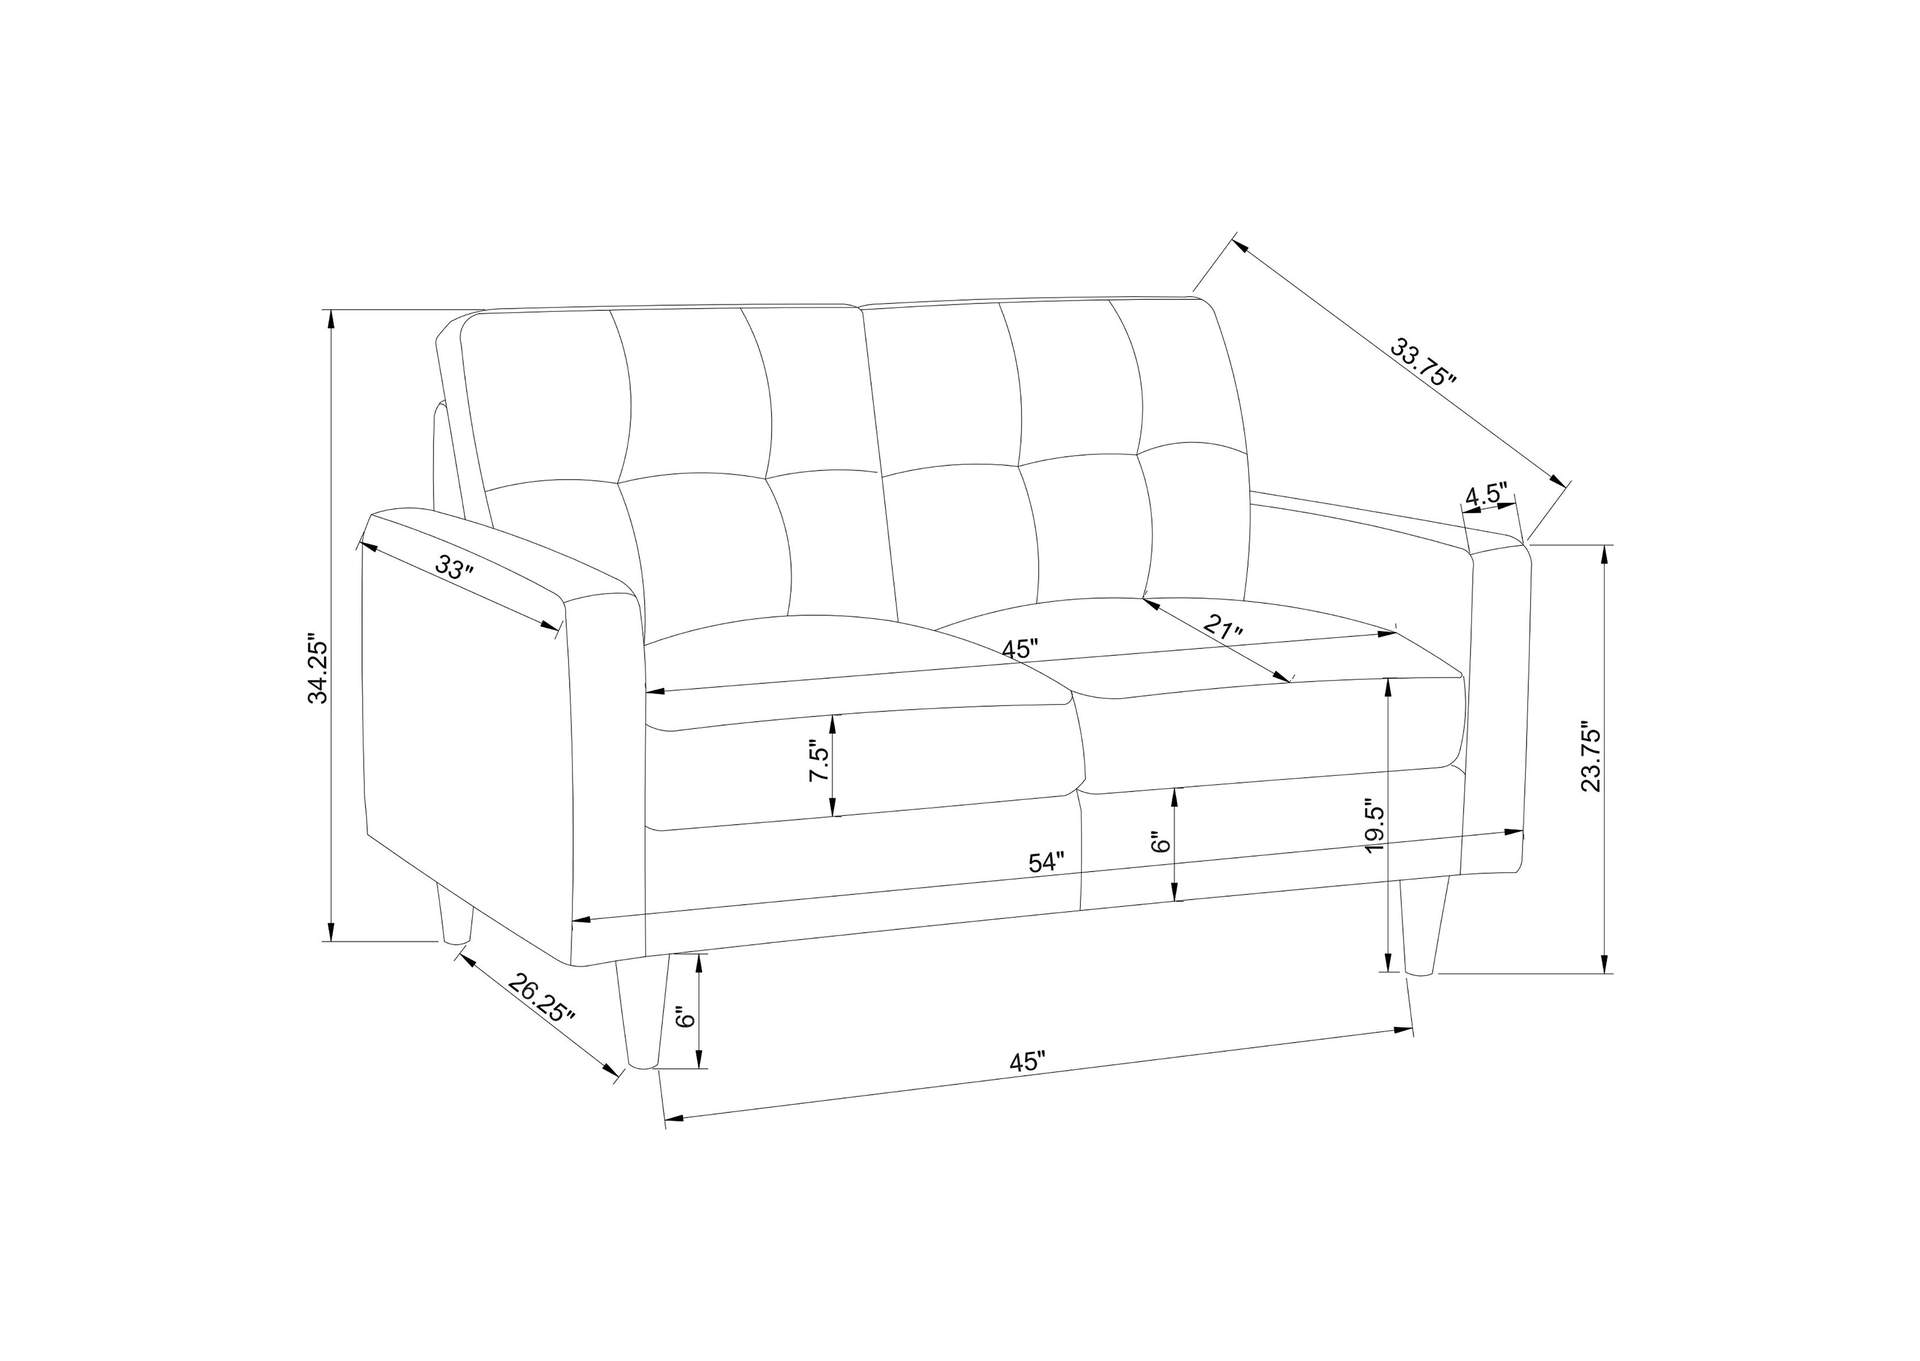 Watsonville 3-piece Cushion Back Living Room Set Grey,Coaster Furniture